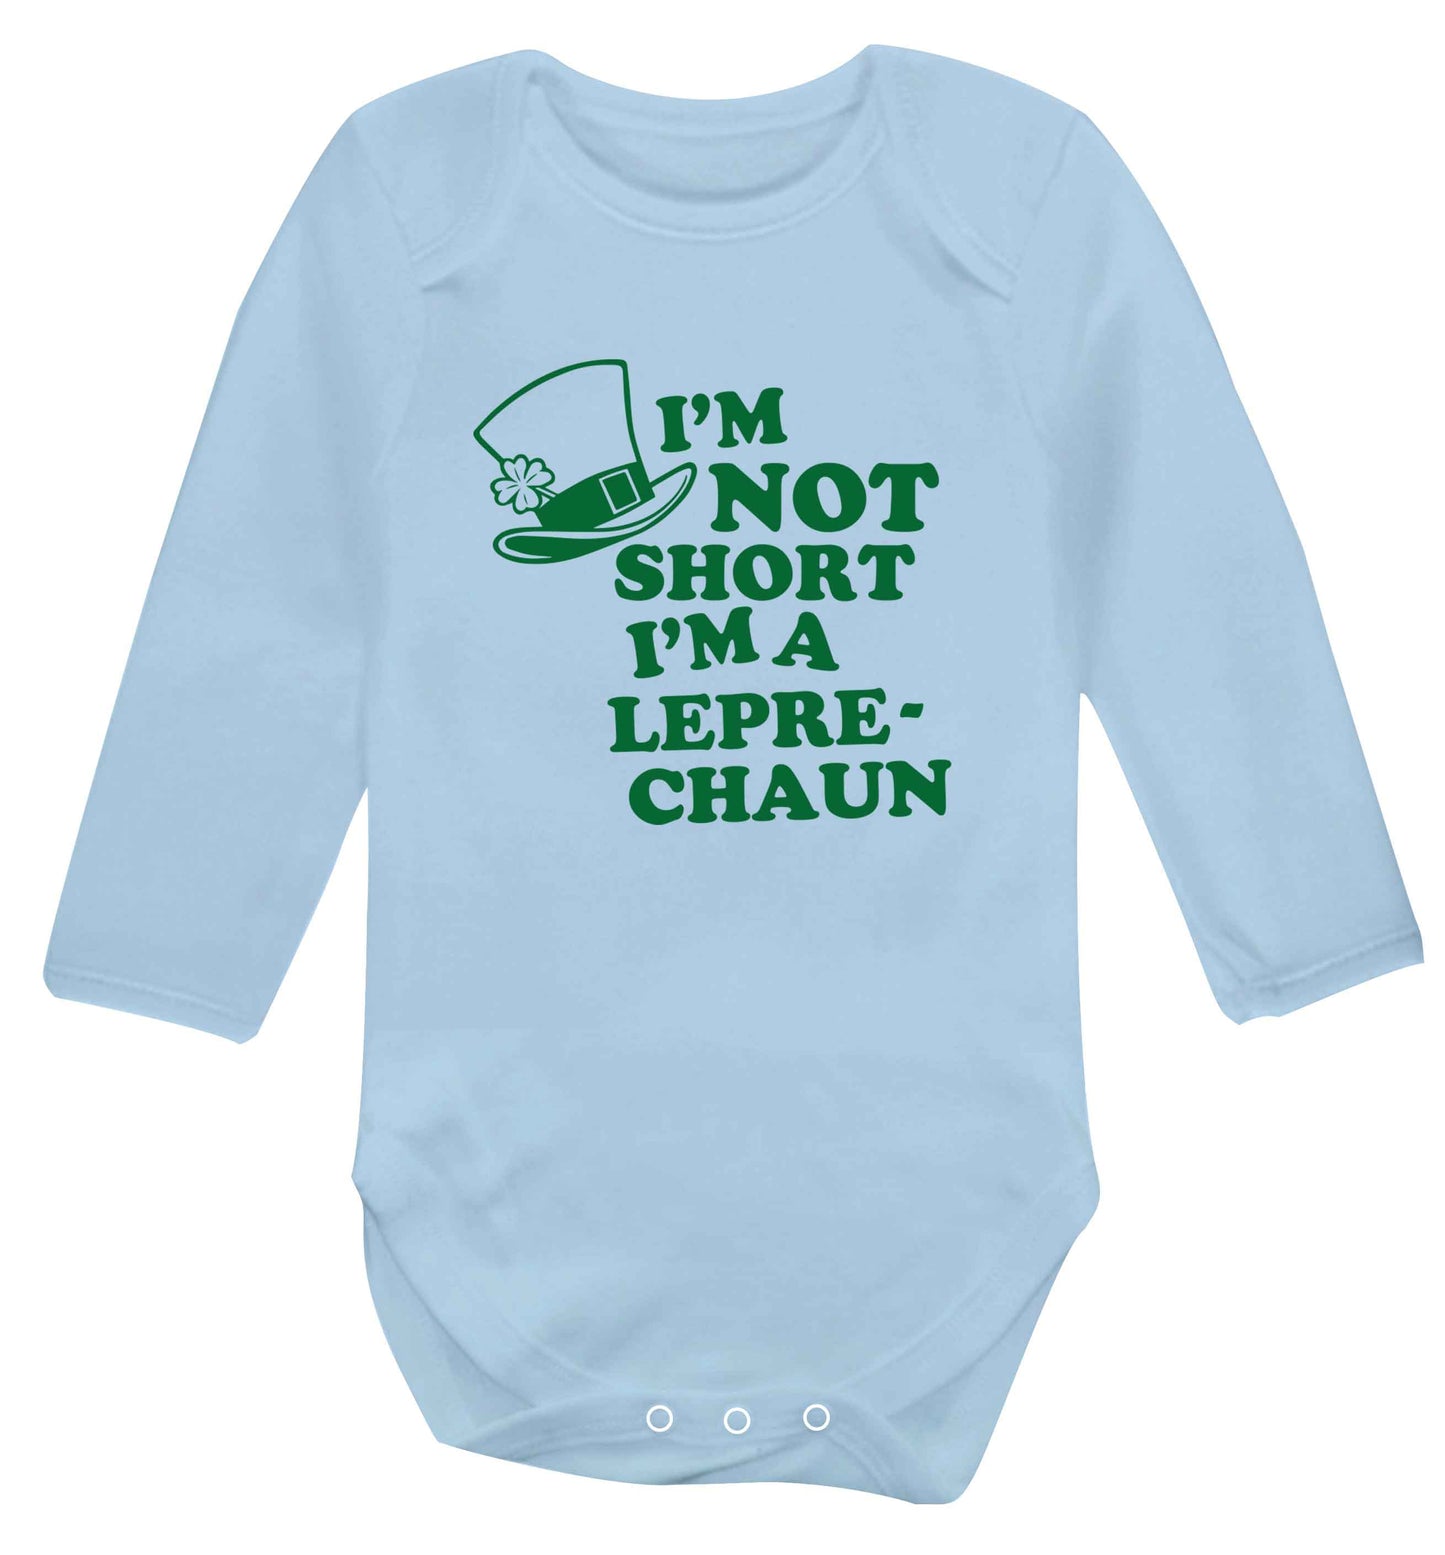 I'm not short I'm a leprechaun baby vest long sleeved pale blue 6-12 months